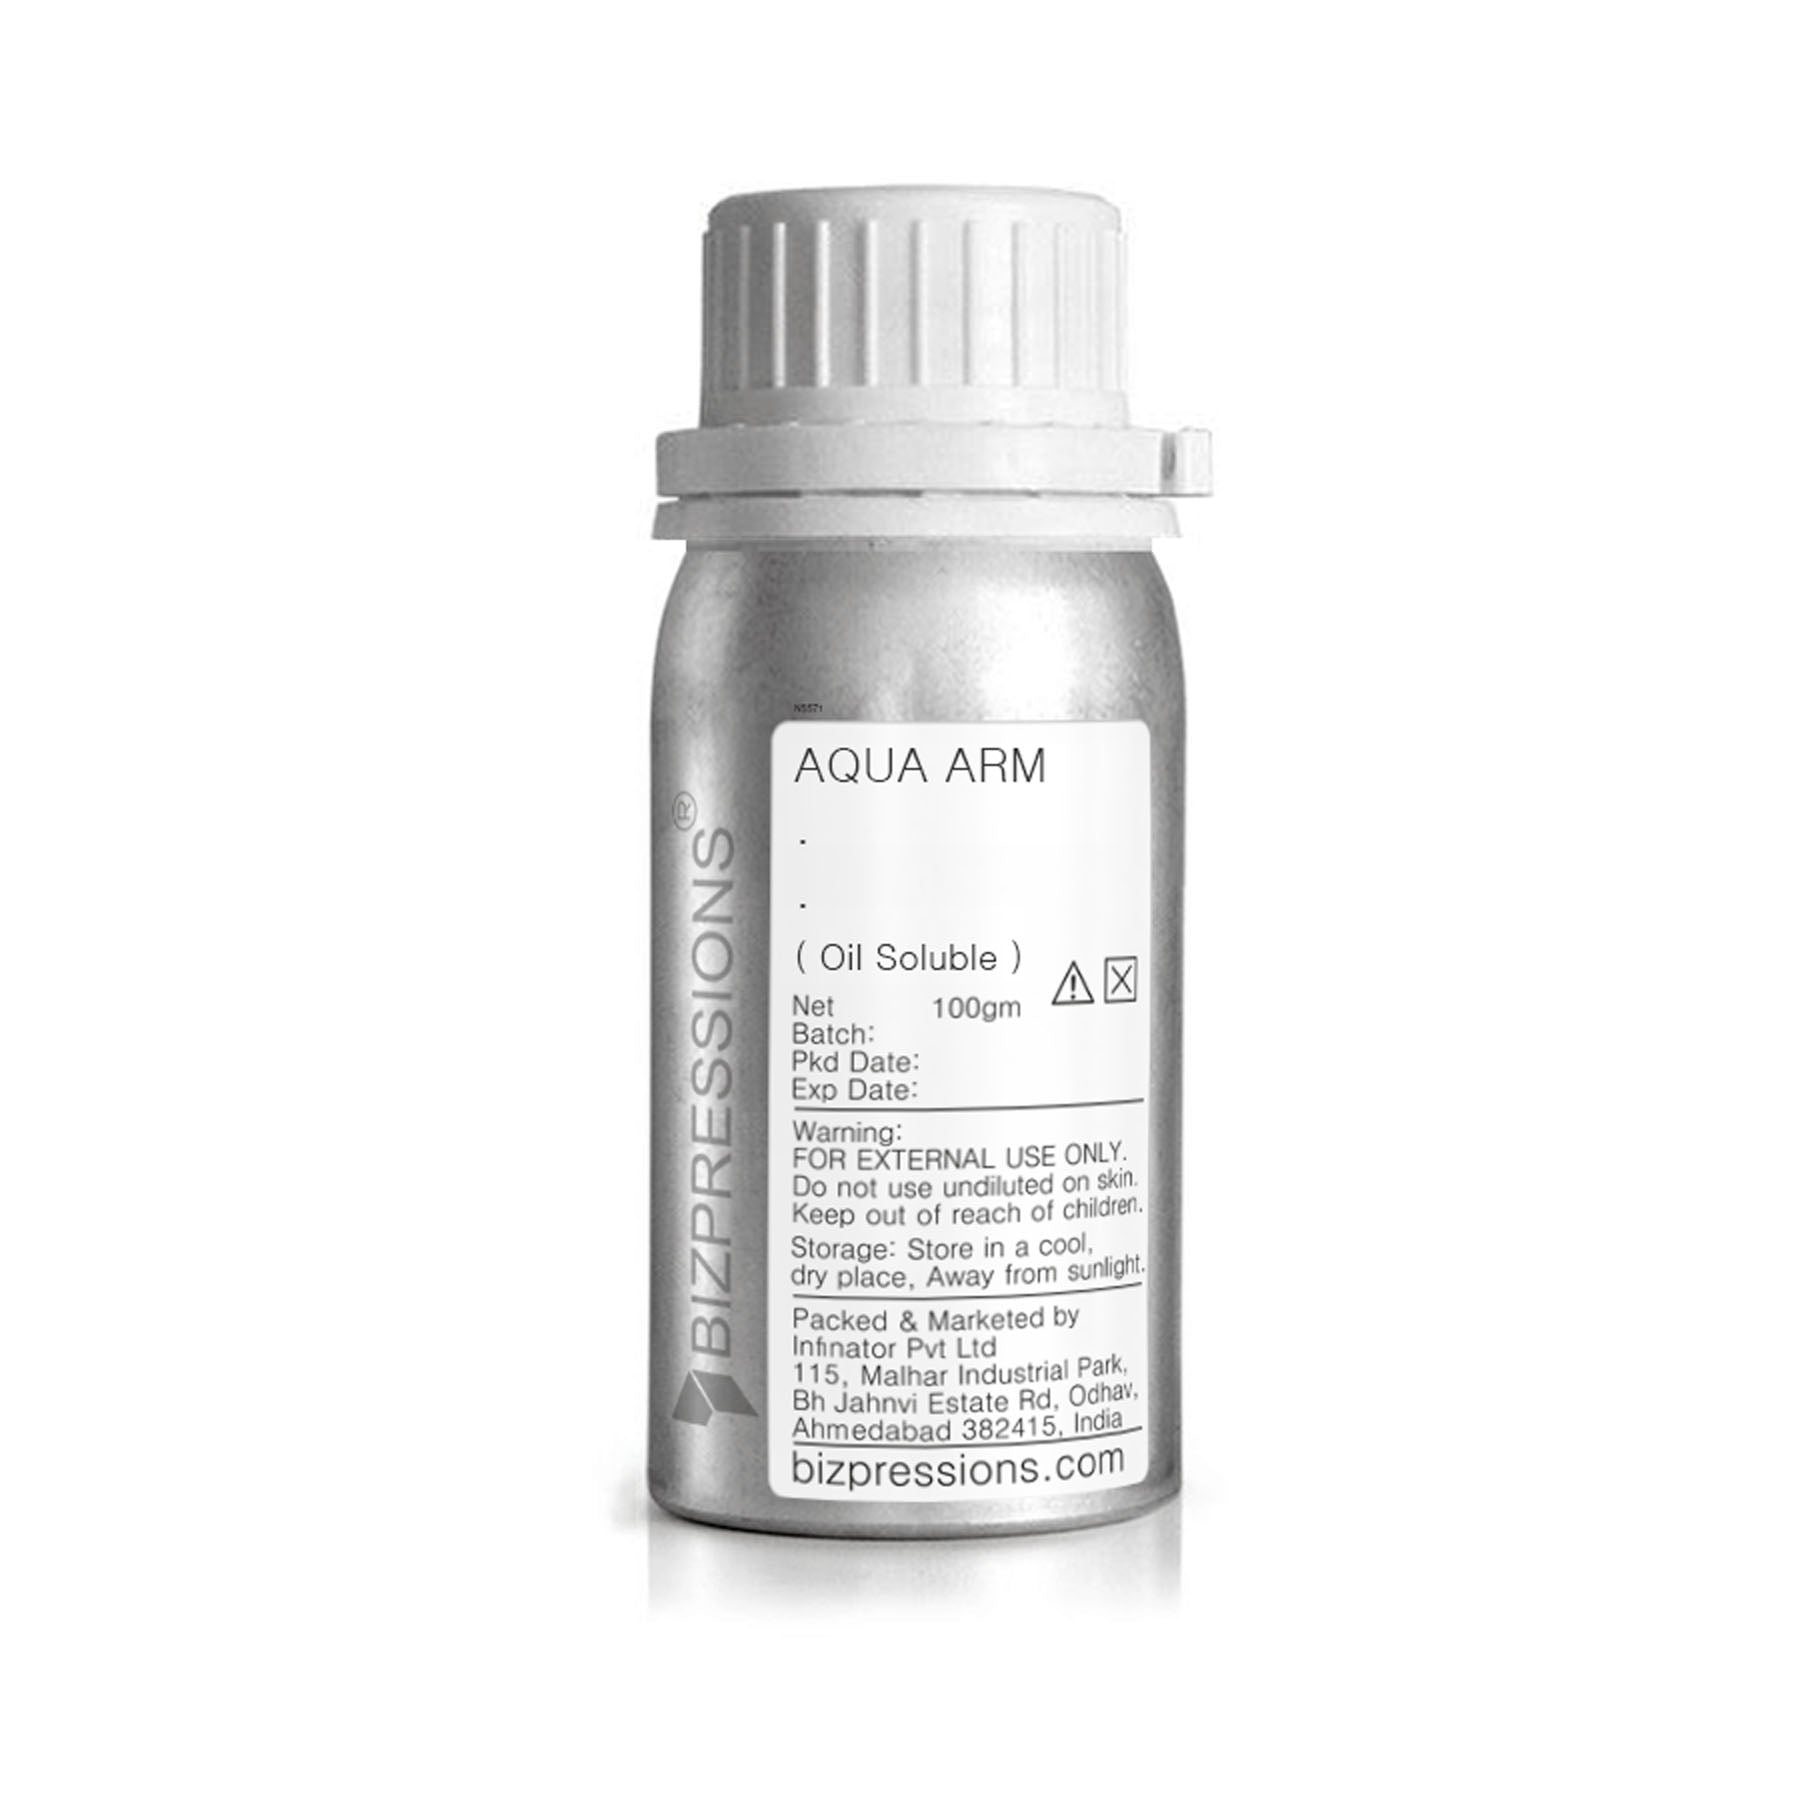 AQUA ARM - Fragrance ( Oil Soluble ) - 100 gm